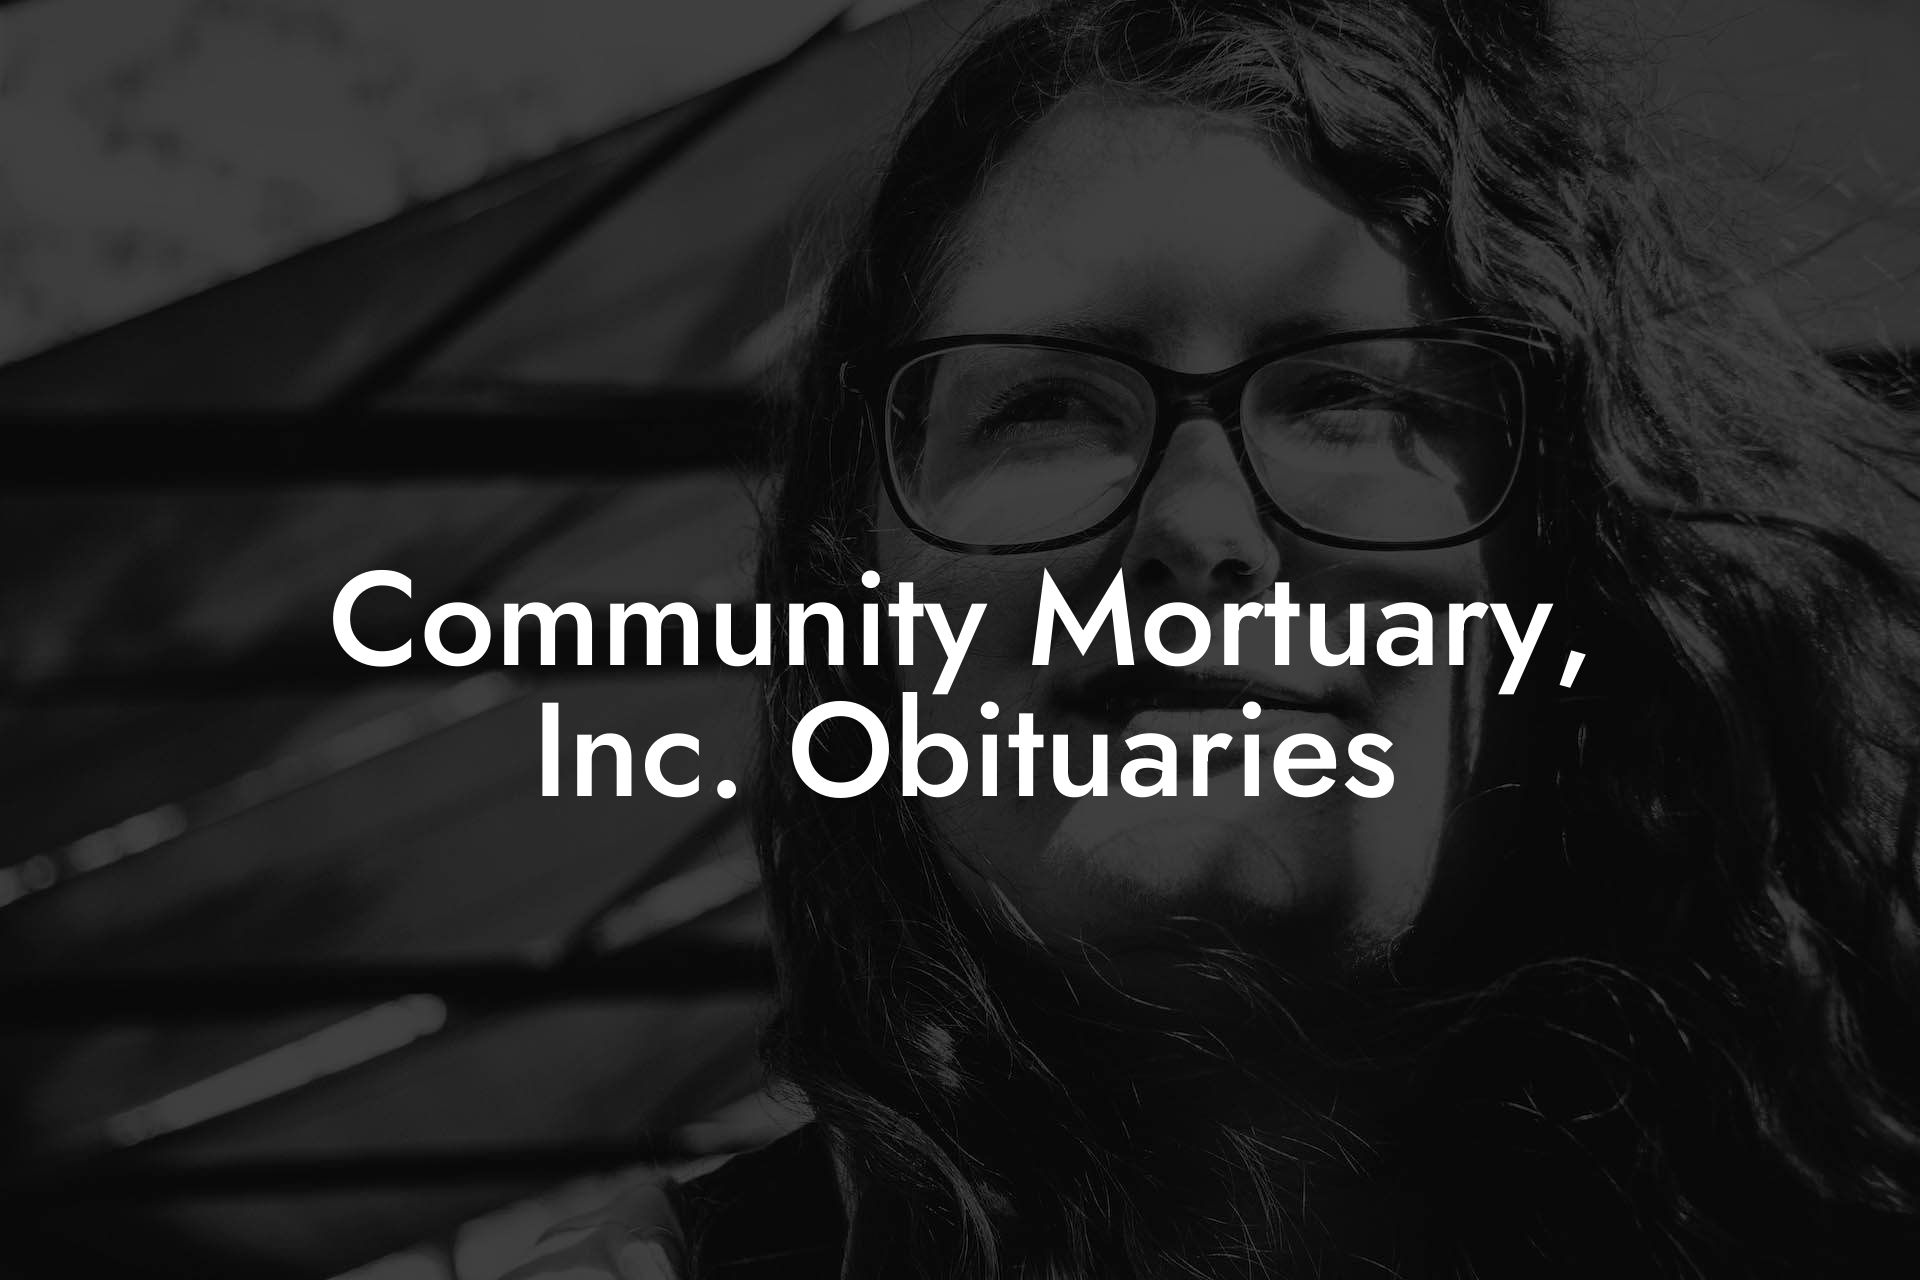 Community Mortuary, Inc. Obituaries